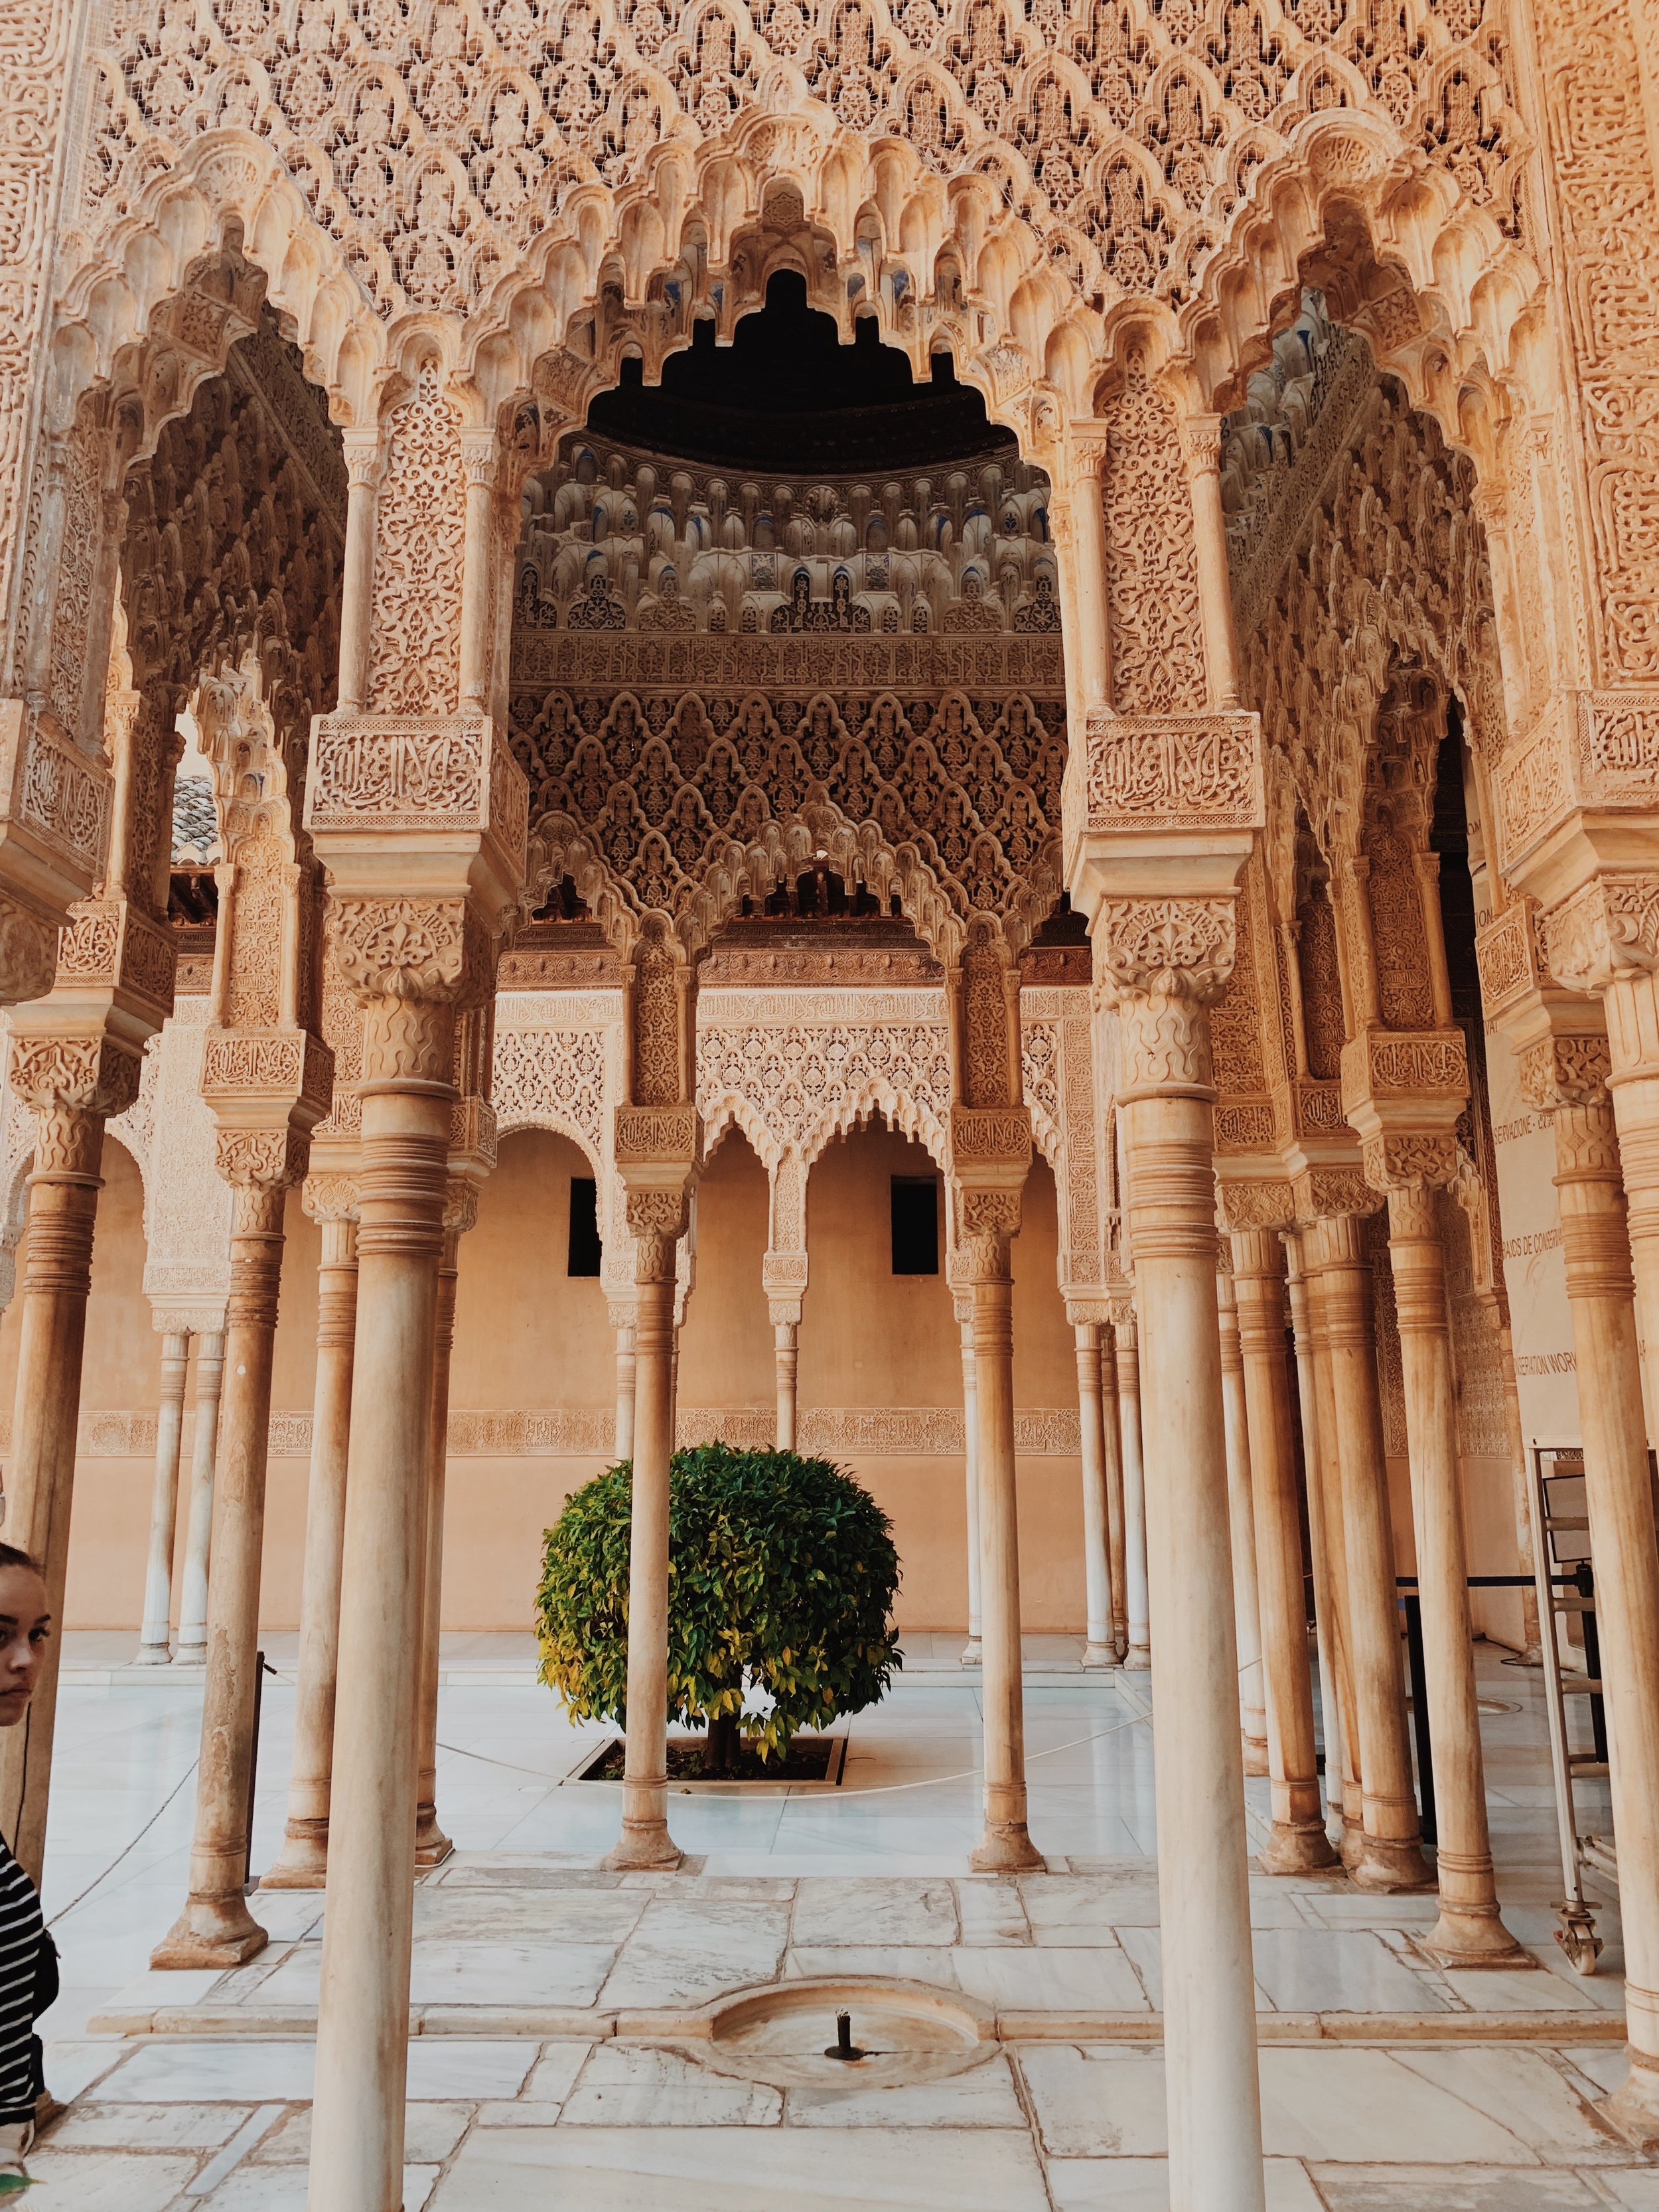 The Ultimate Travel Guide for Granada, Spain